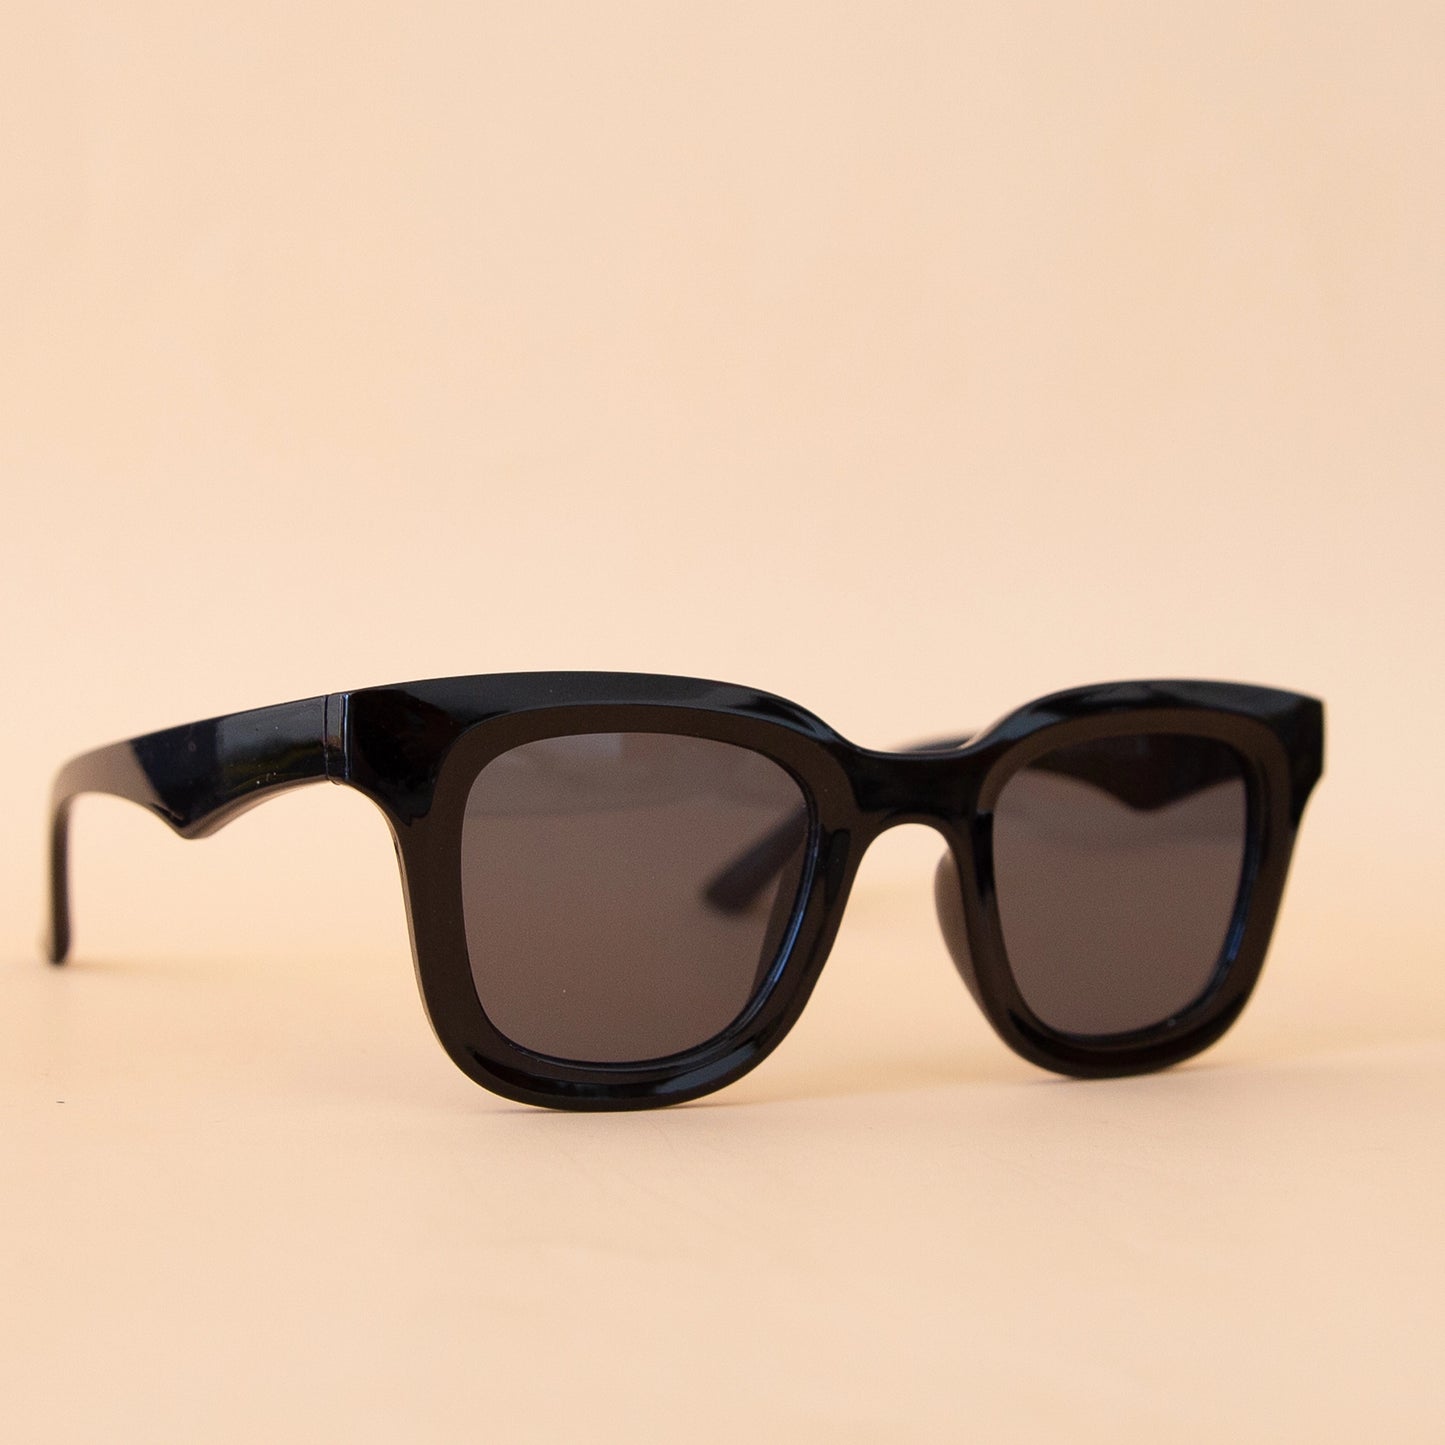 Charlie Sunglasses - Black